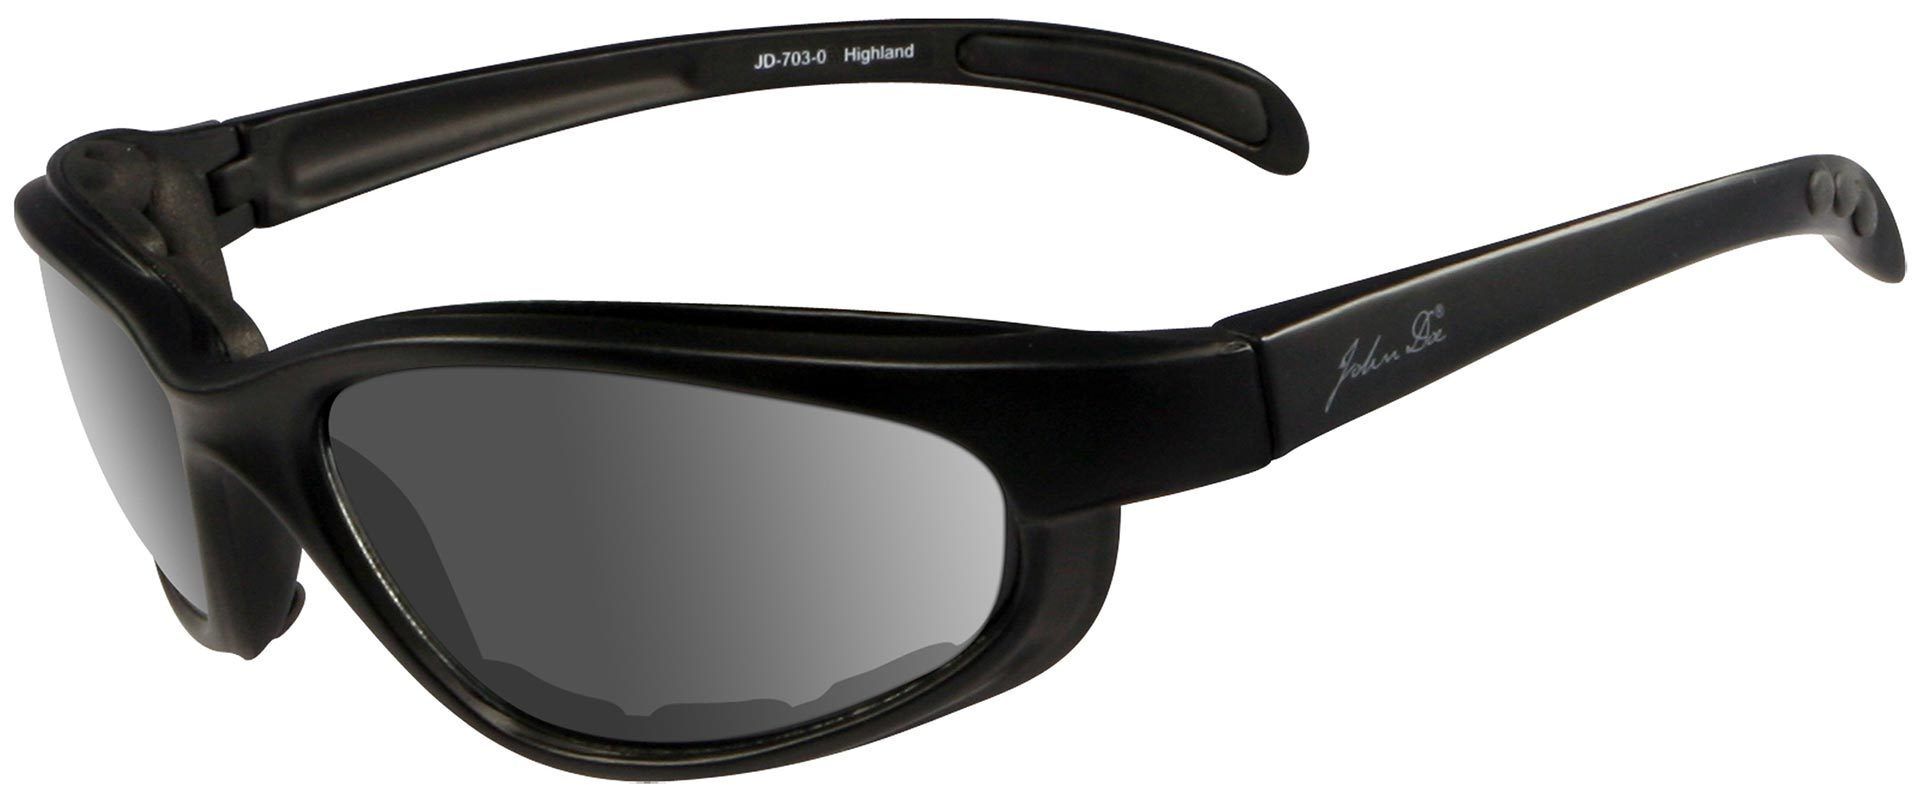 John Doe Highland Photochromic Gafas de sol - Negro (un tamaño)